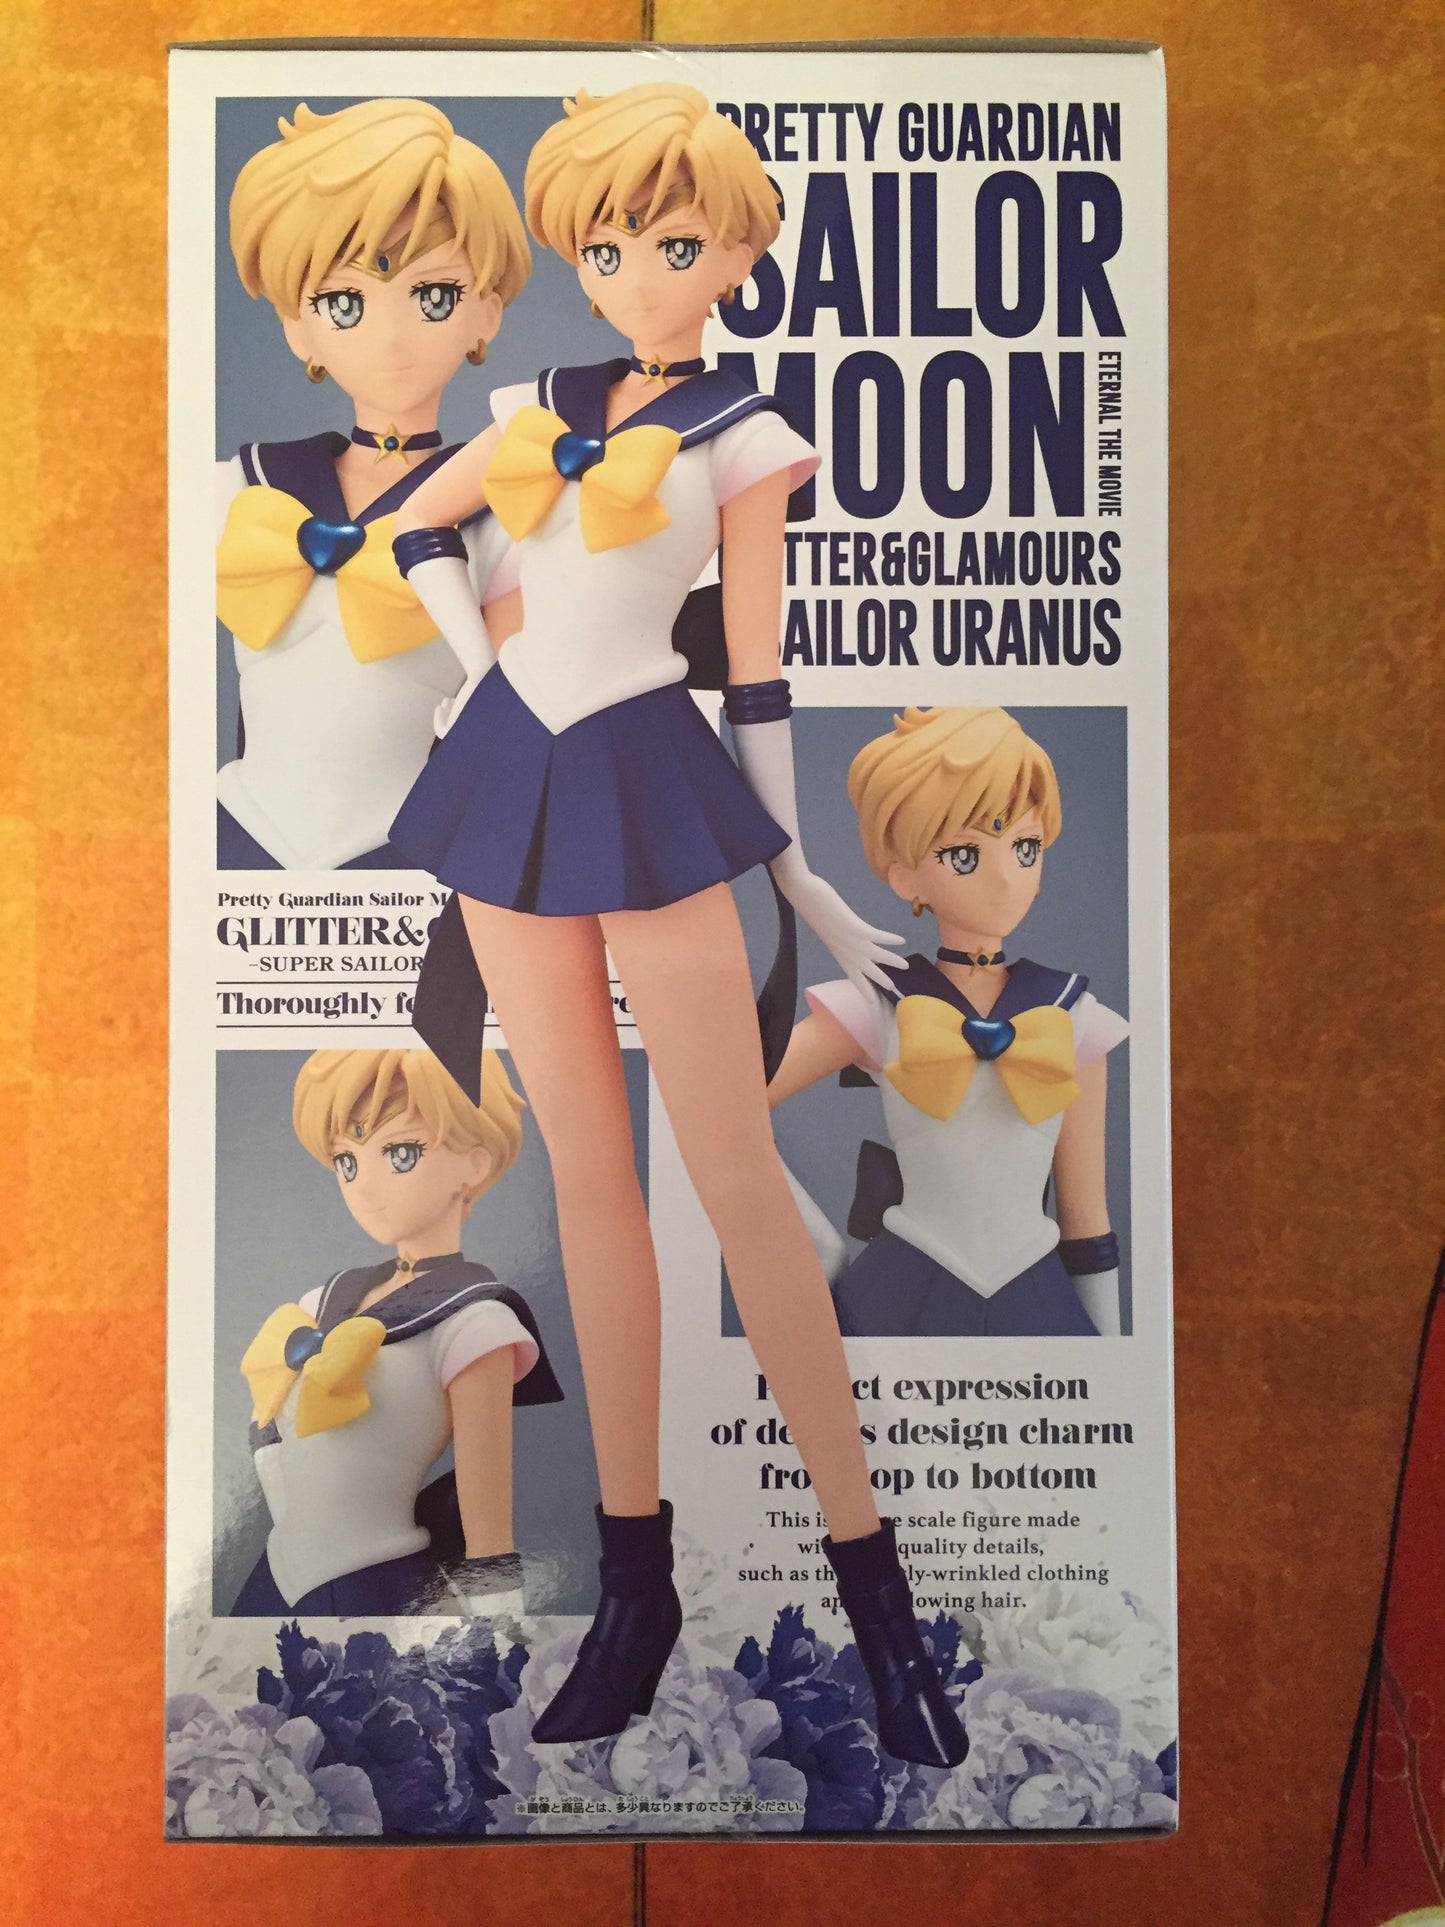 Sailor moon - Super Sailor Uranus Glitter & Glamours